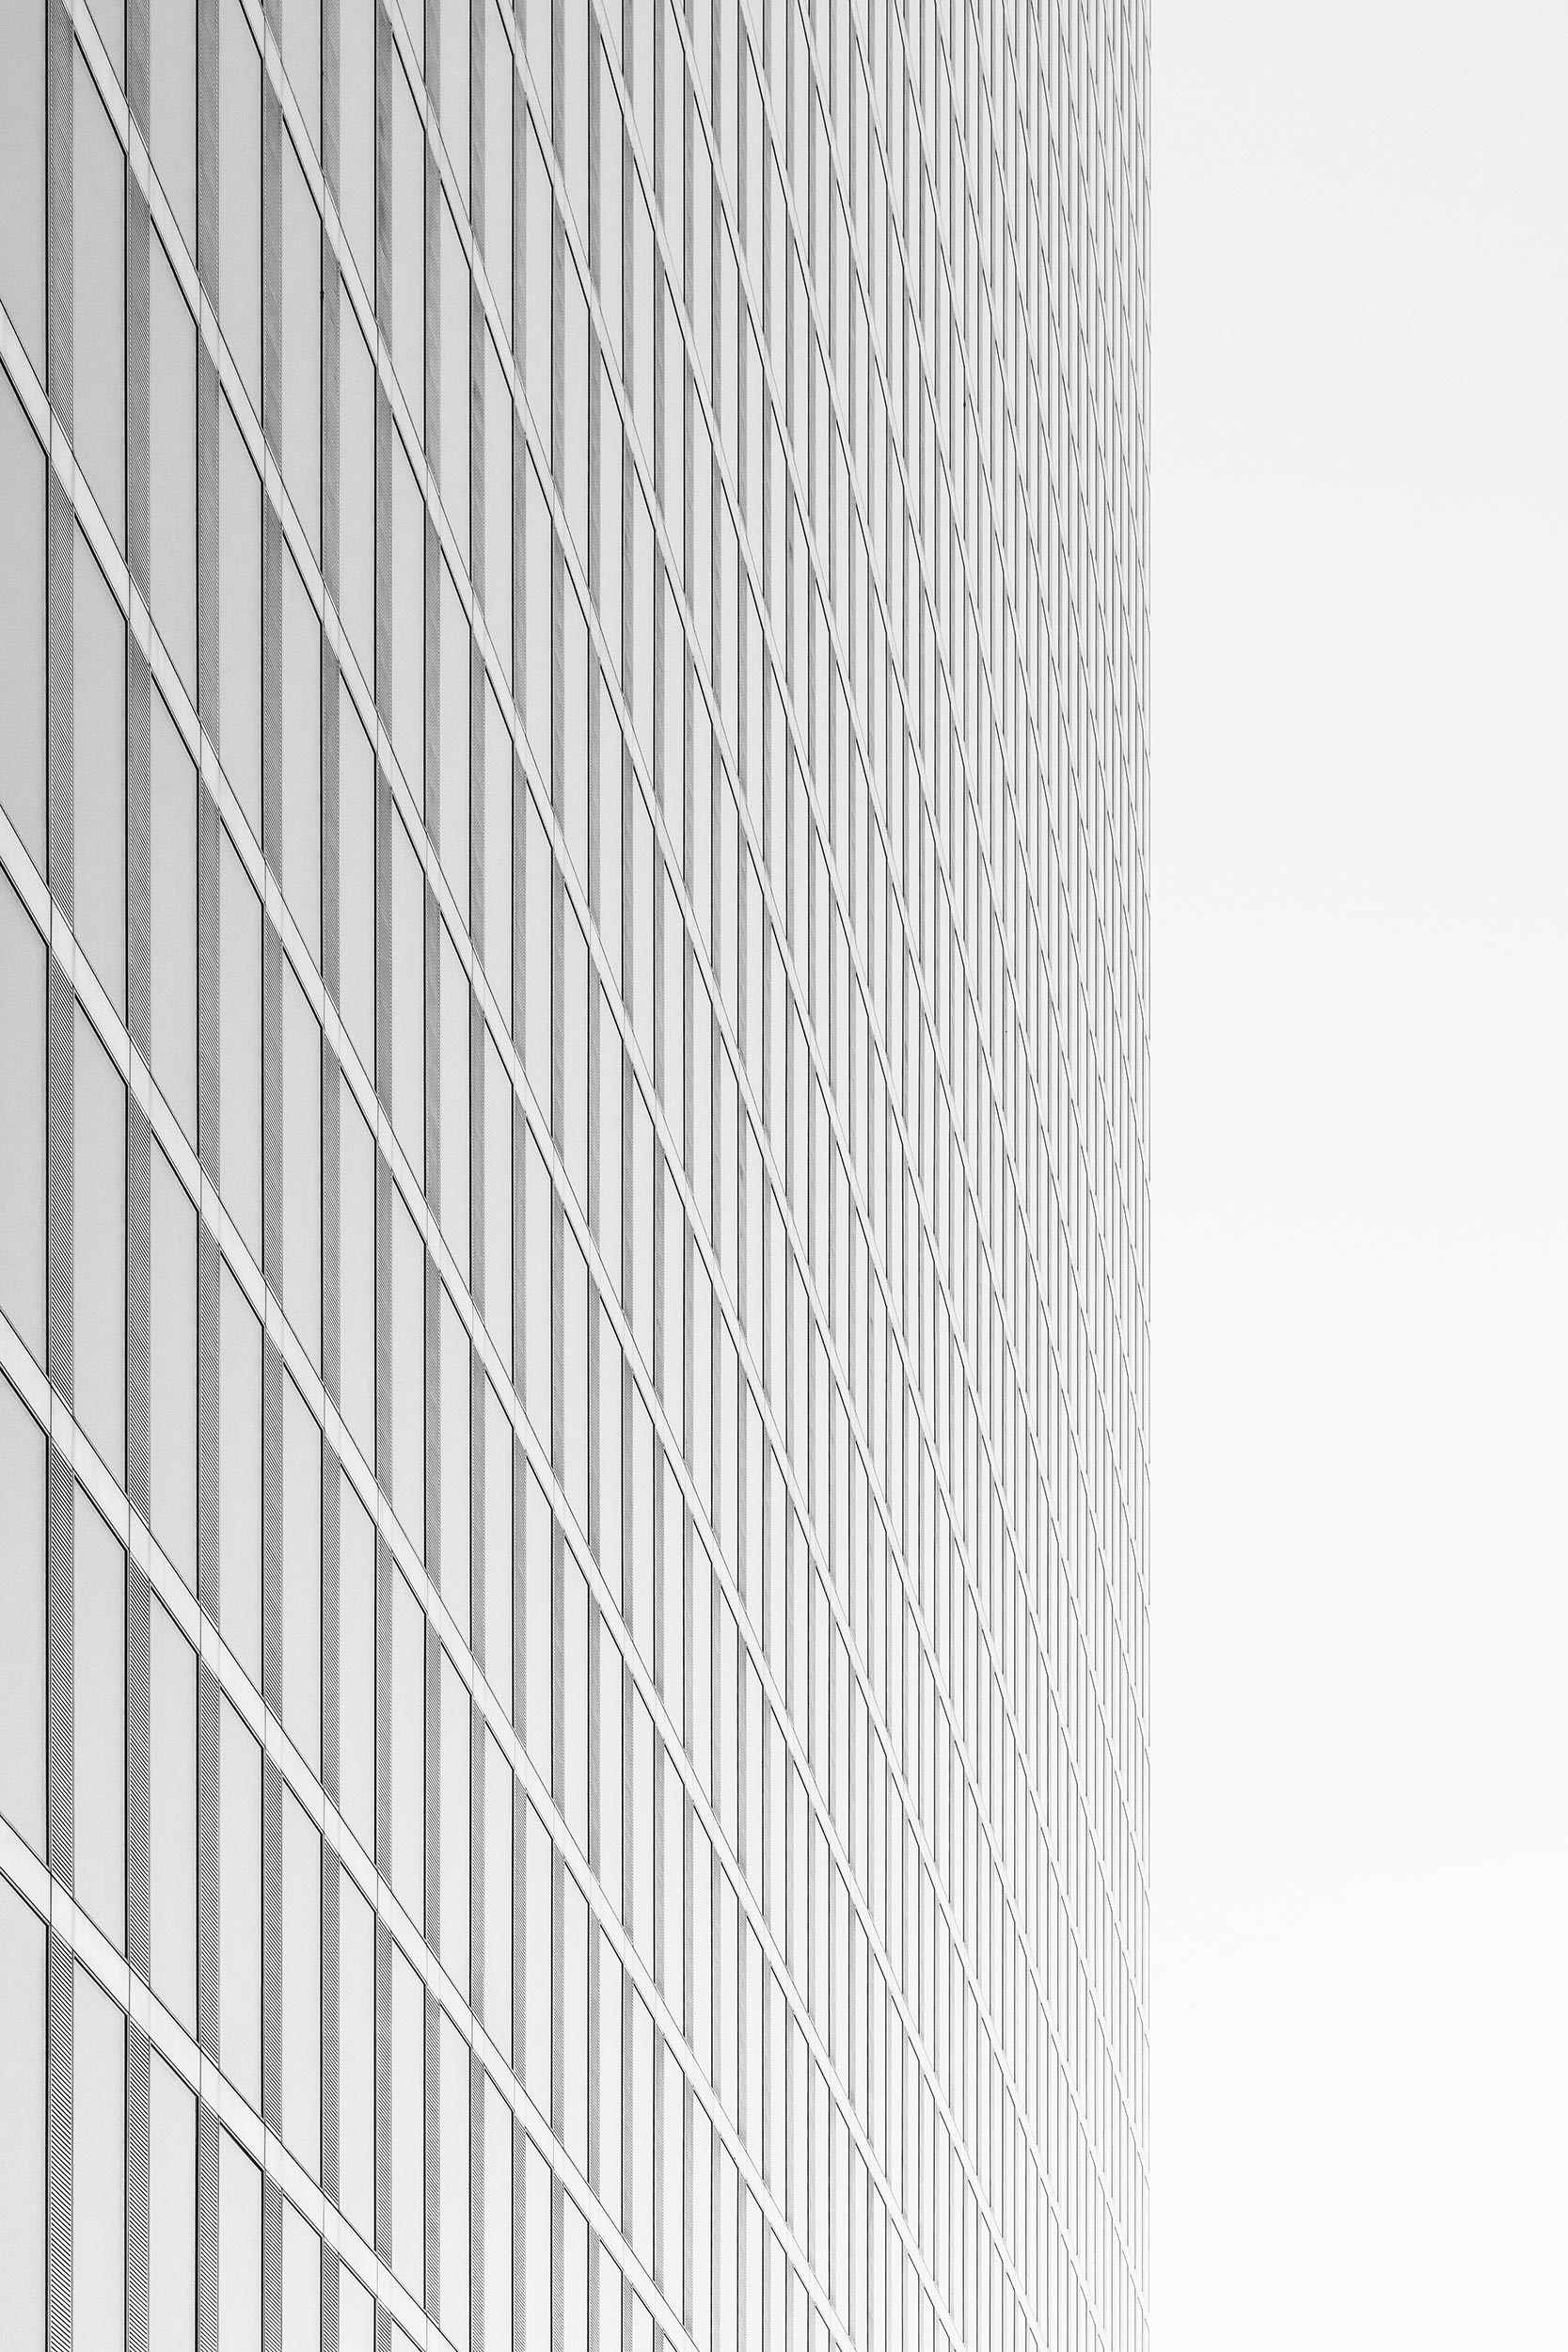 HighLight Towers, Munich - Helmut Jahn - Black & White Fine Art Architecture Photography